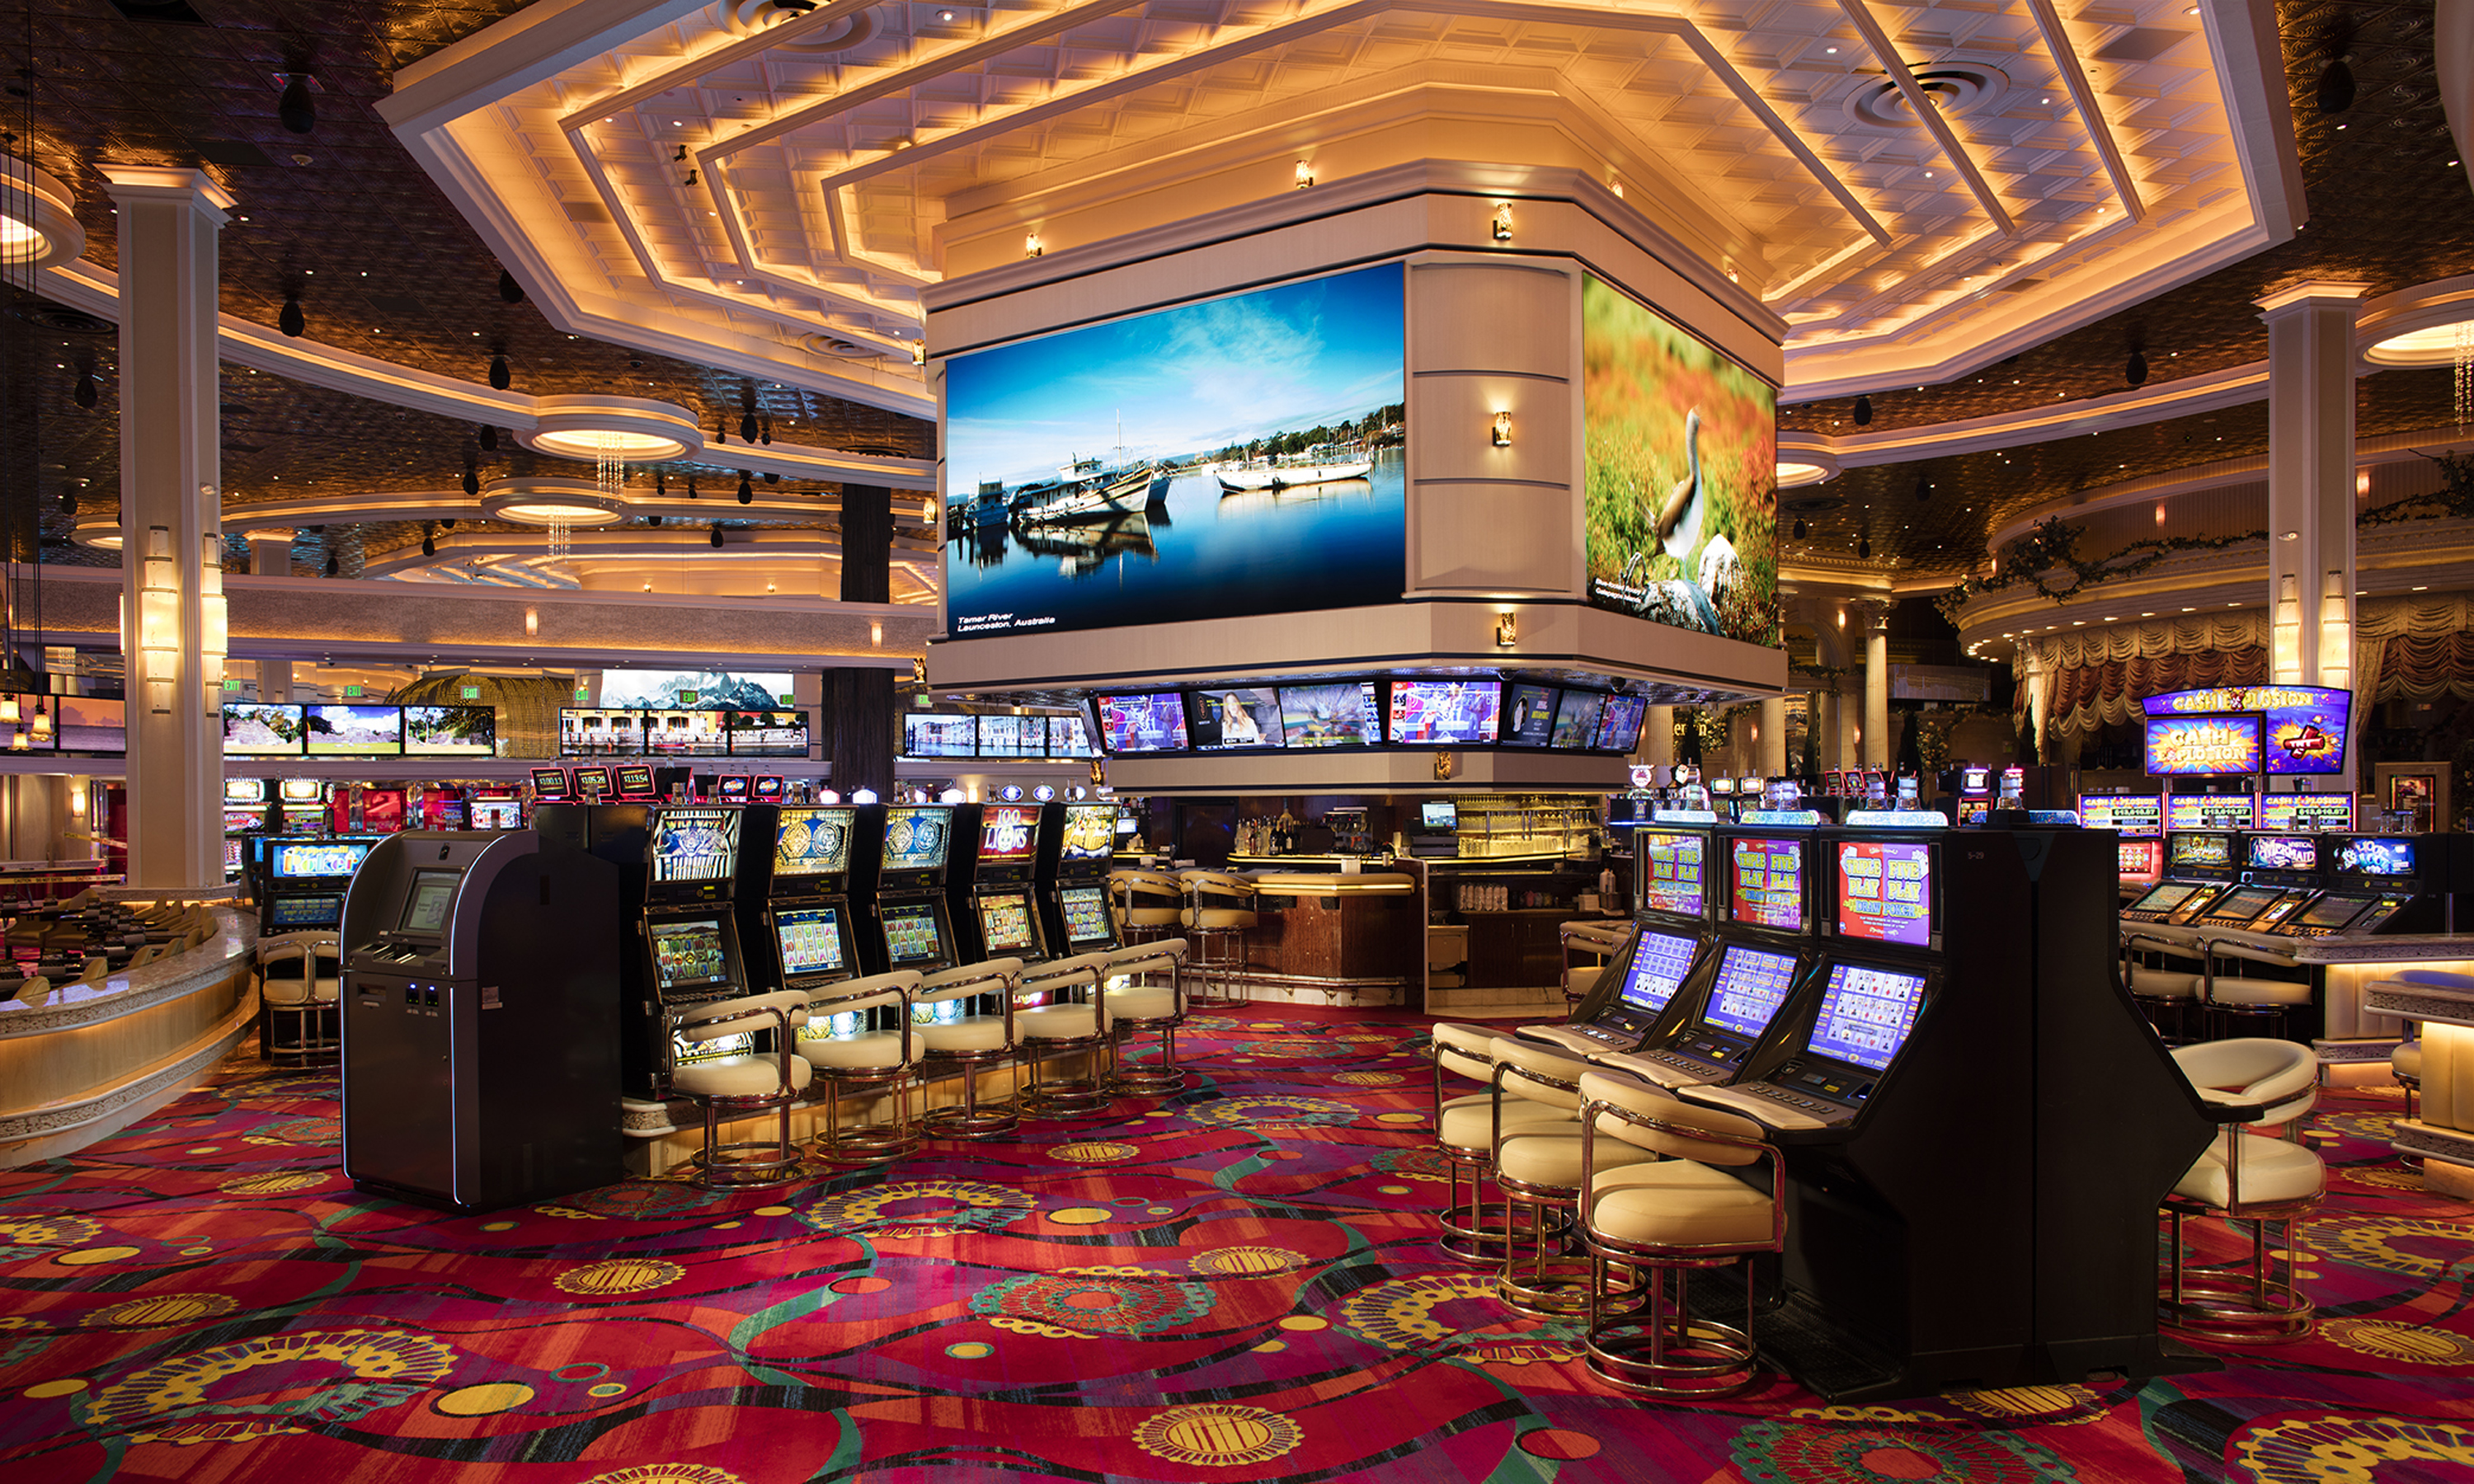 Luxury Casino Online Login